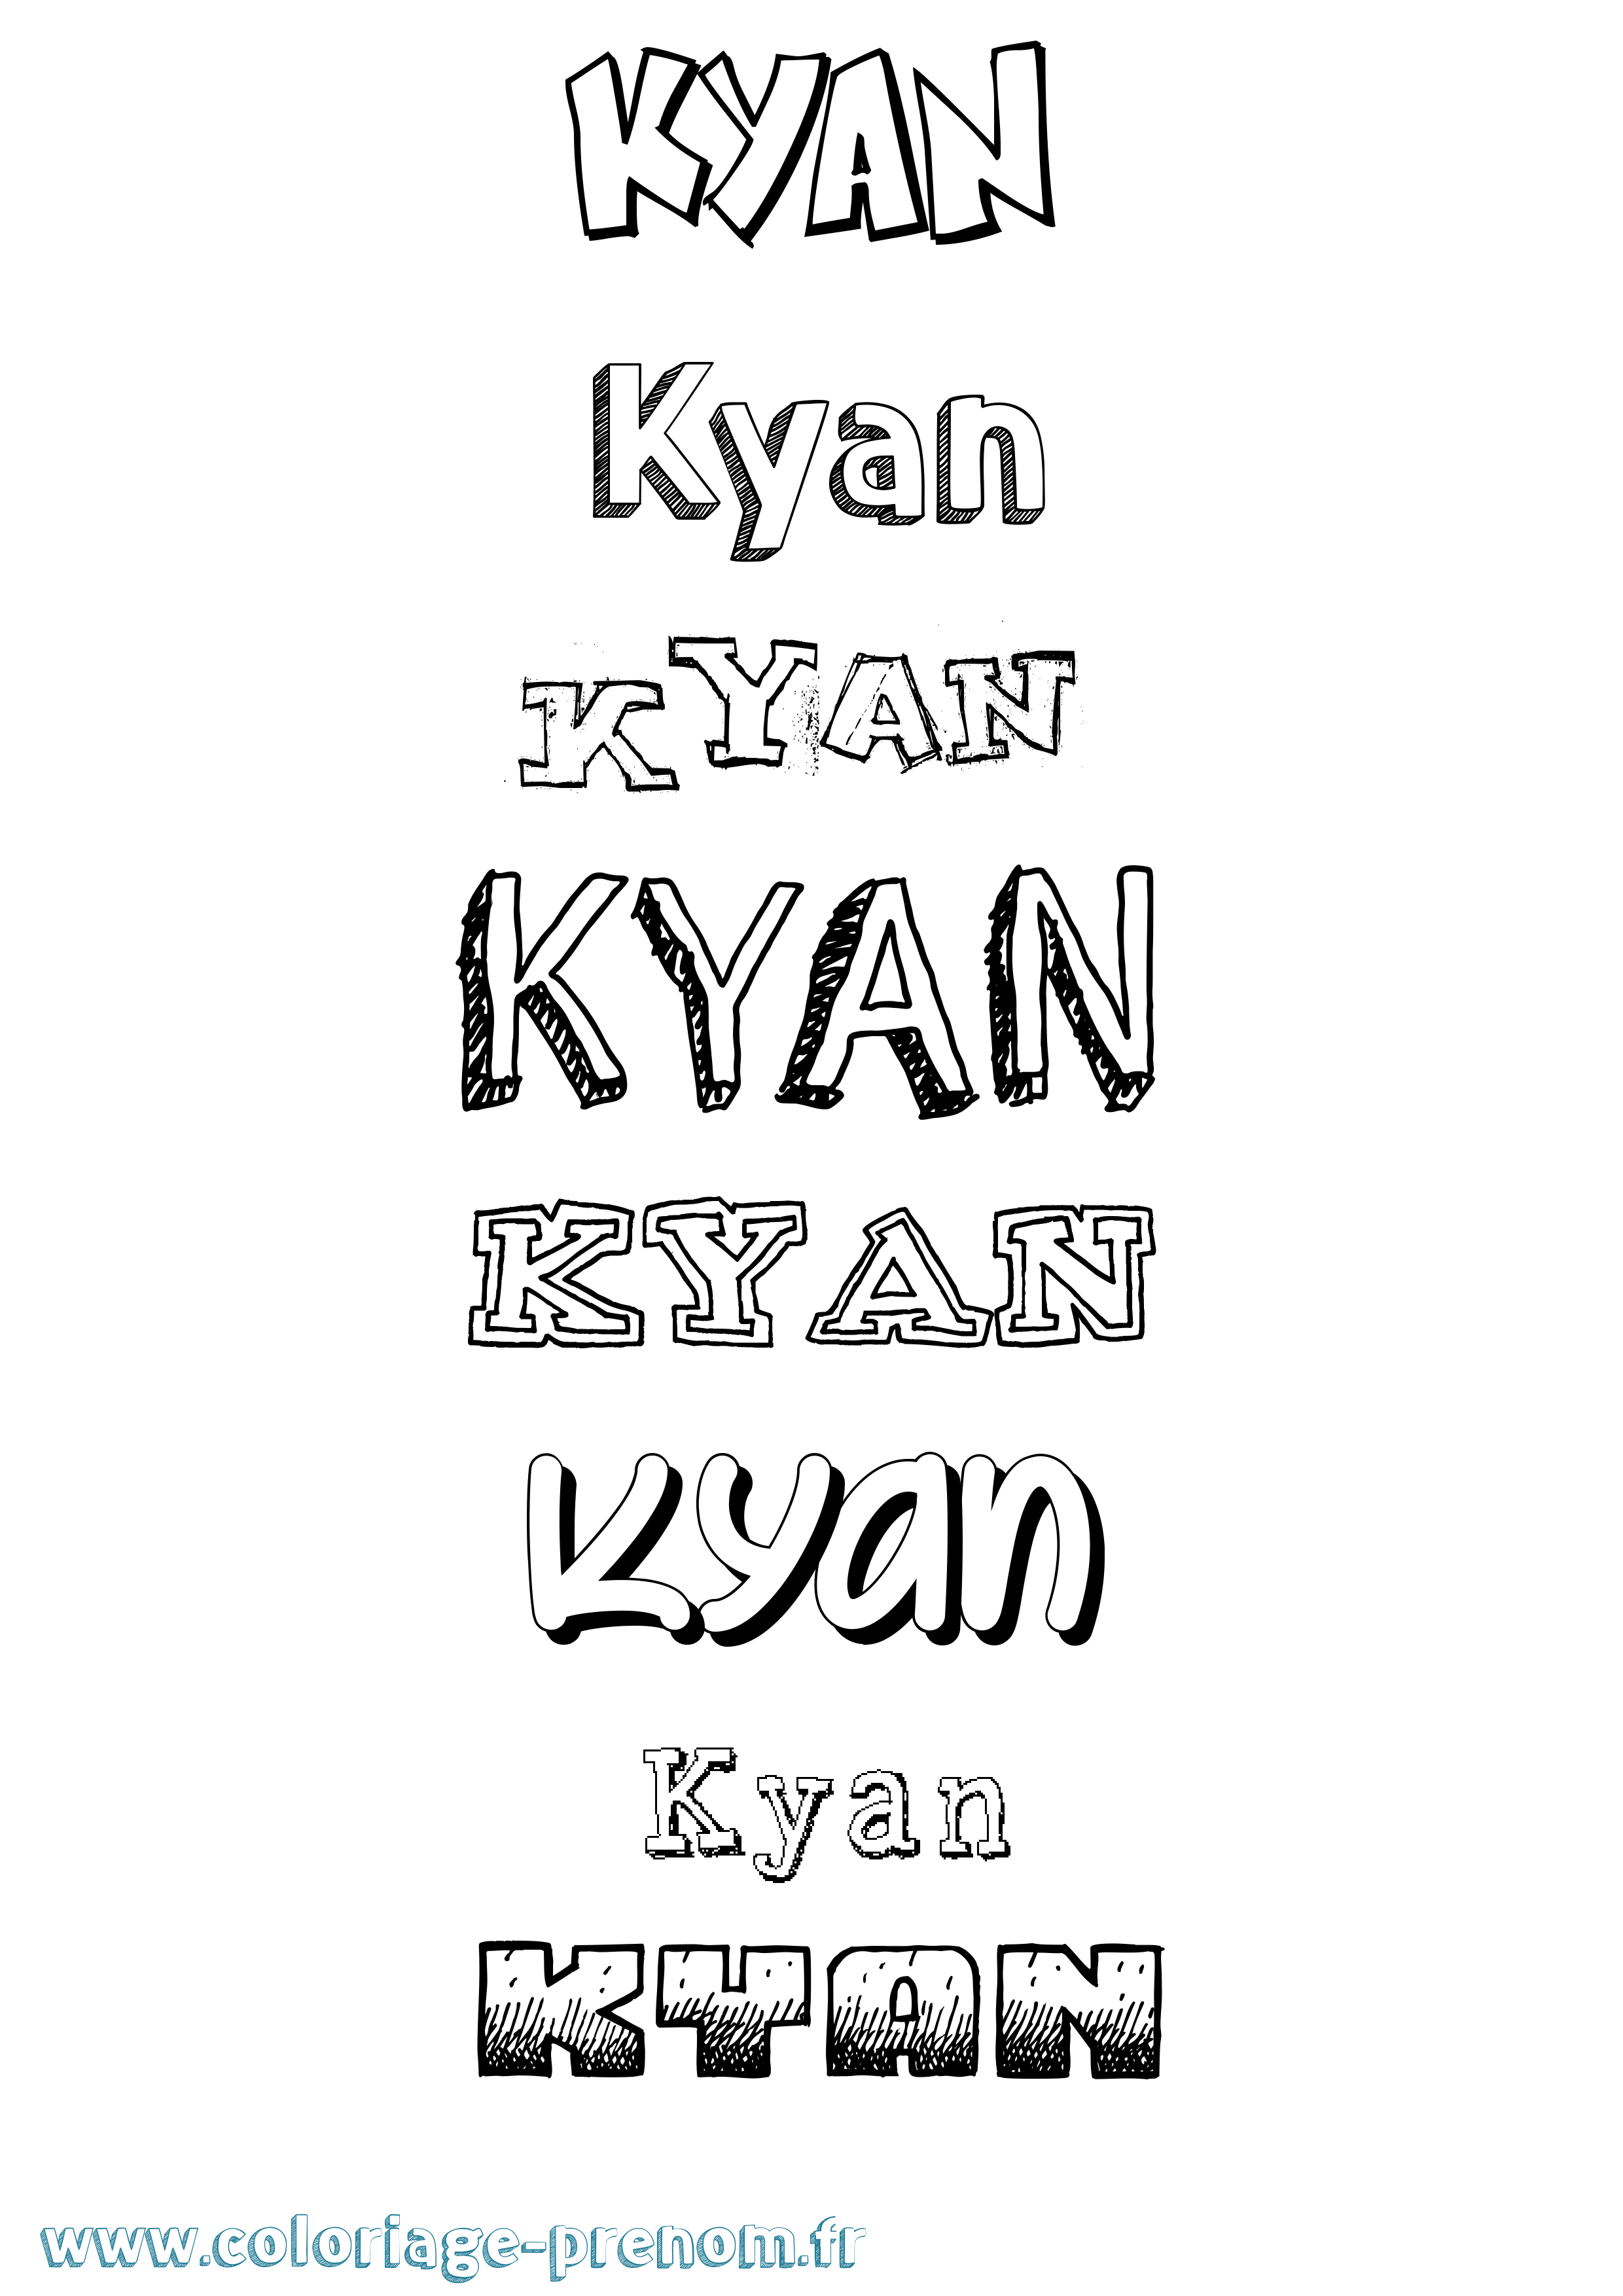 Coloriage prénom Kyan Dessiné